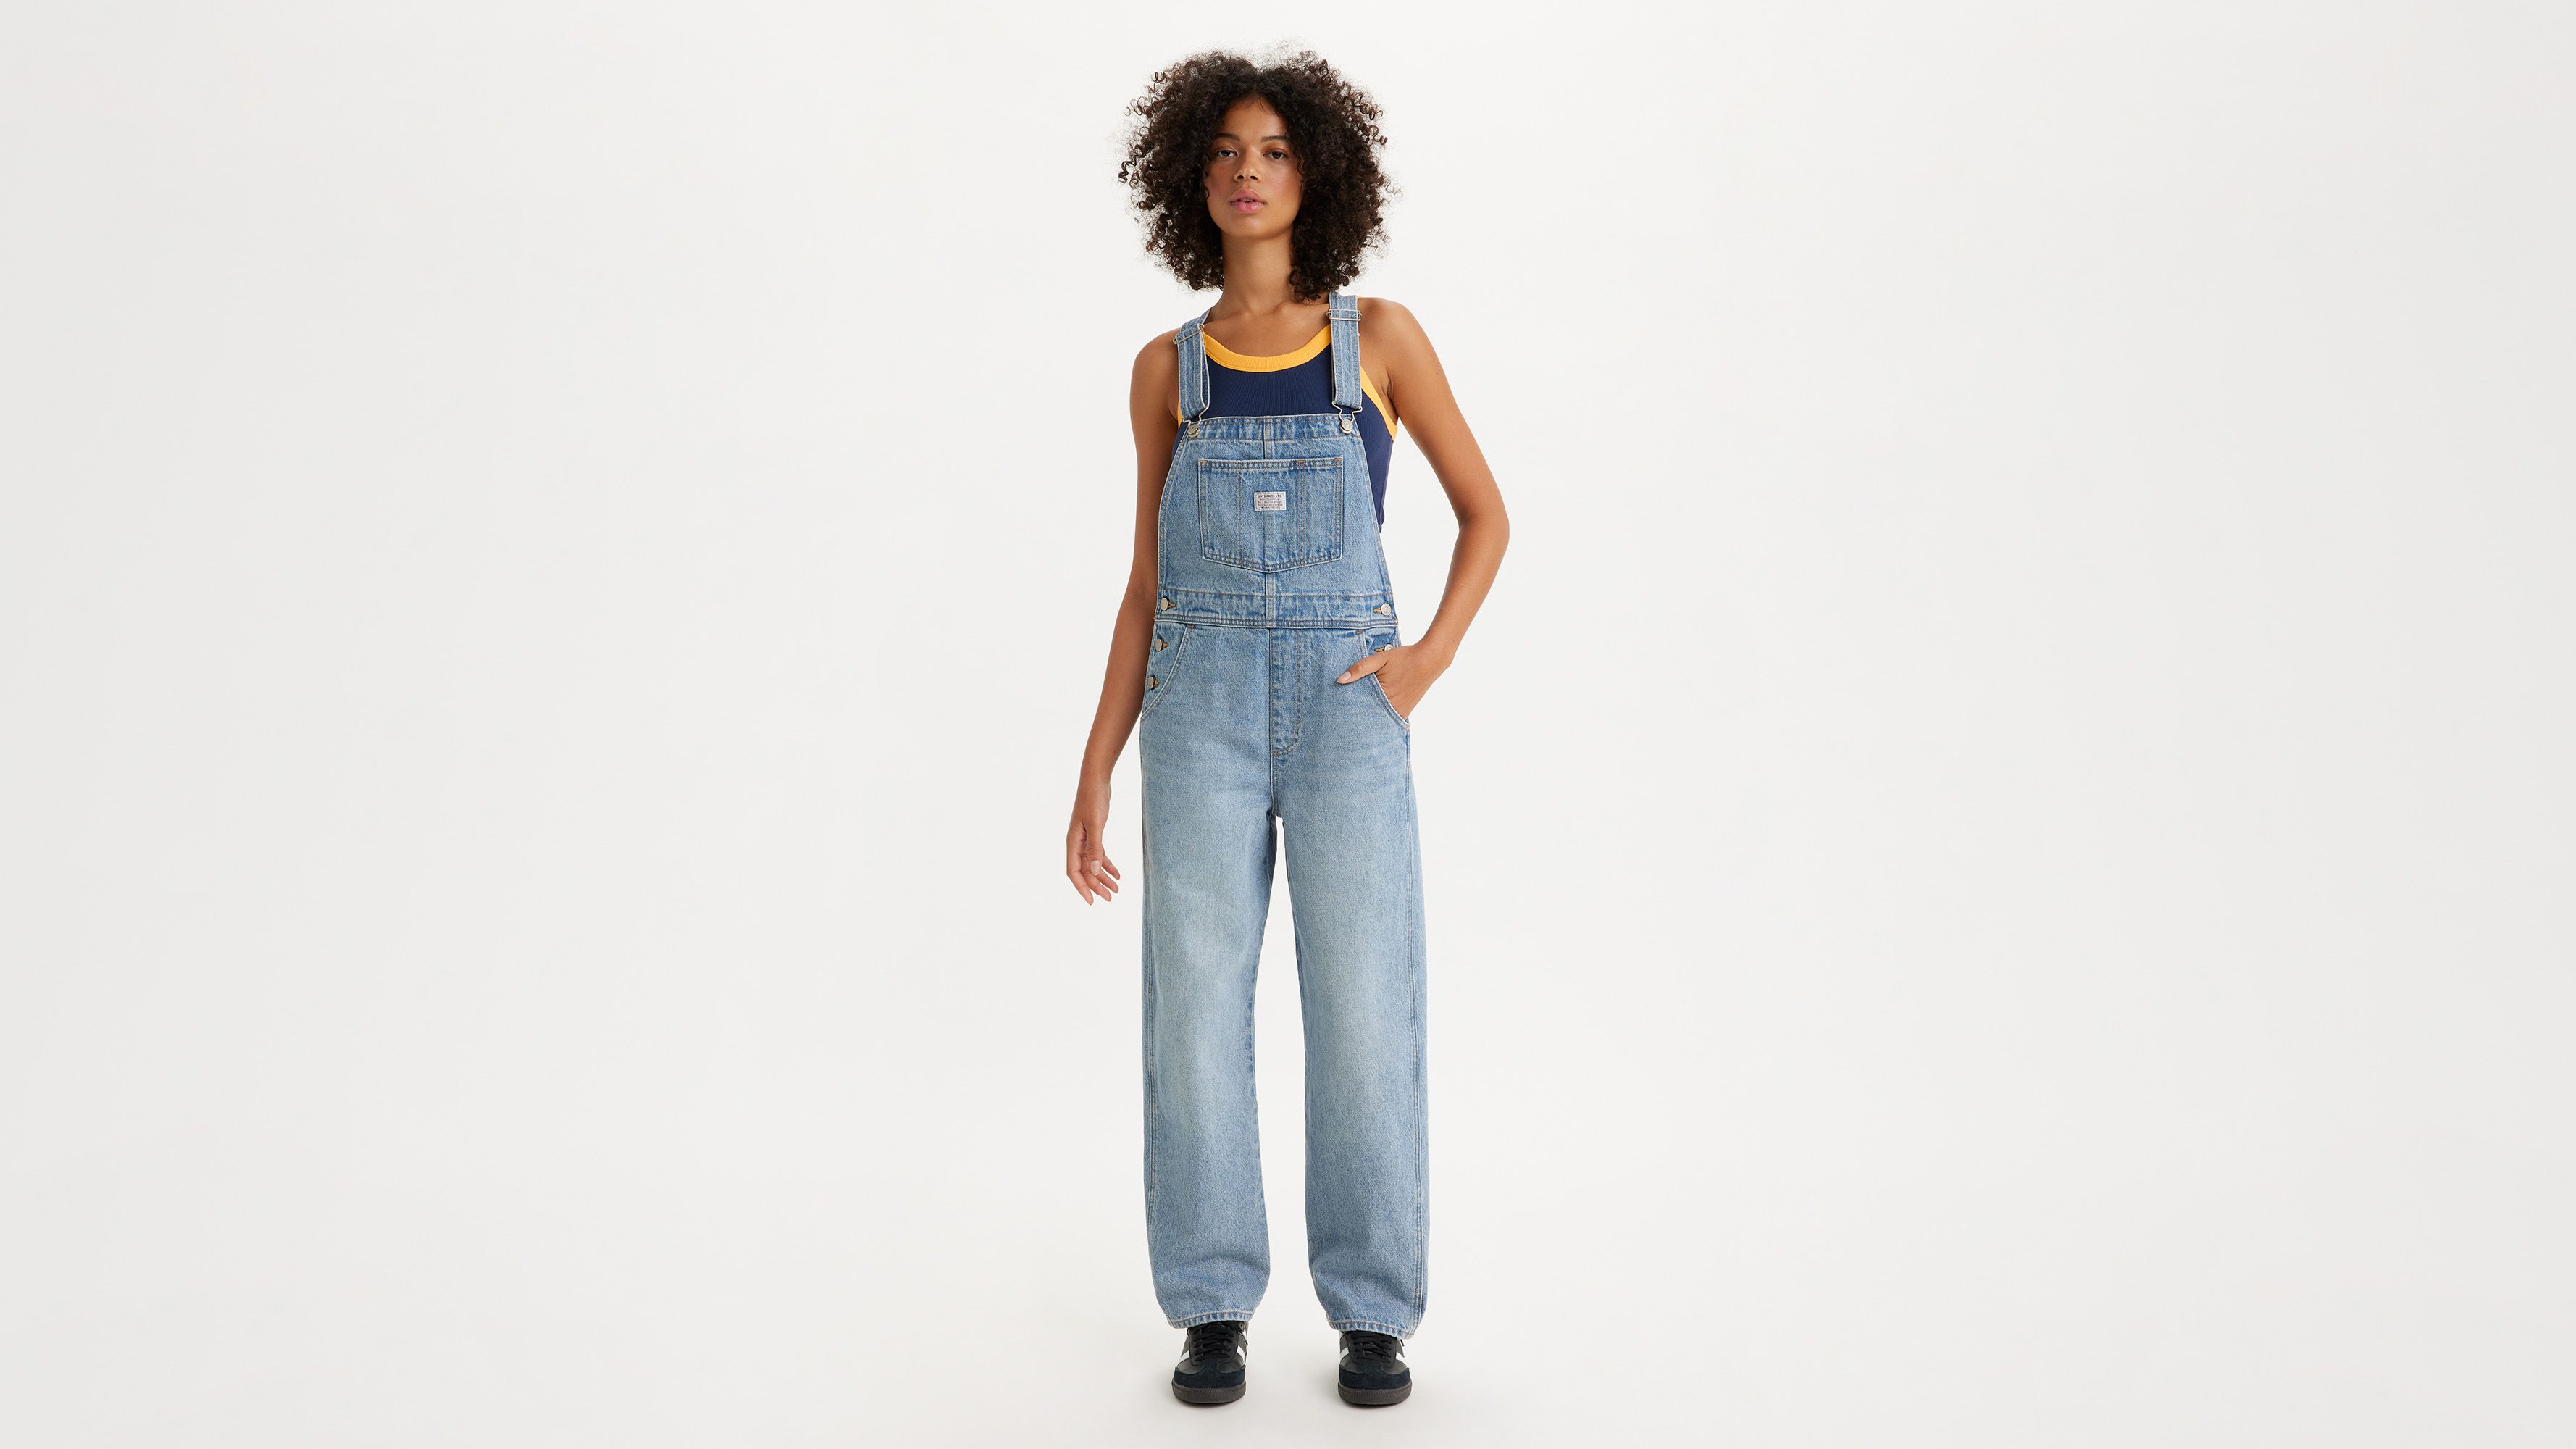 Women's 207 Vintage Jeans, Overalls